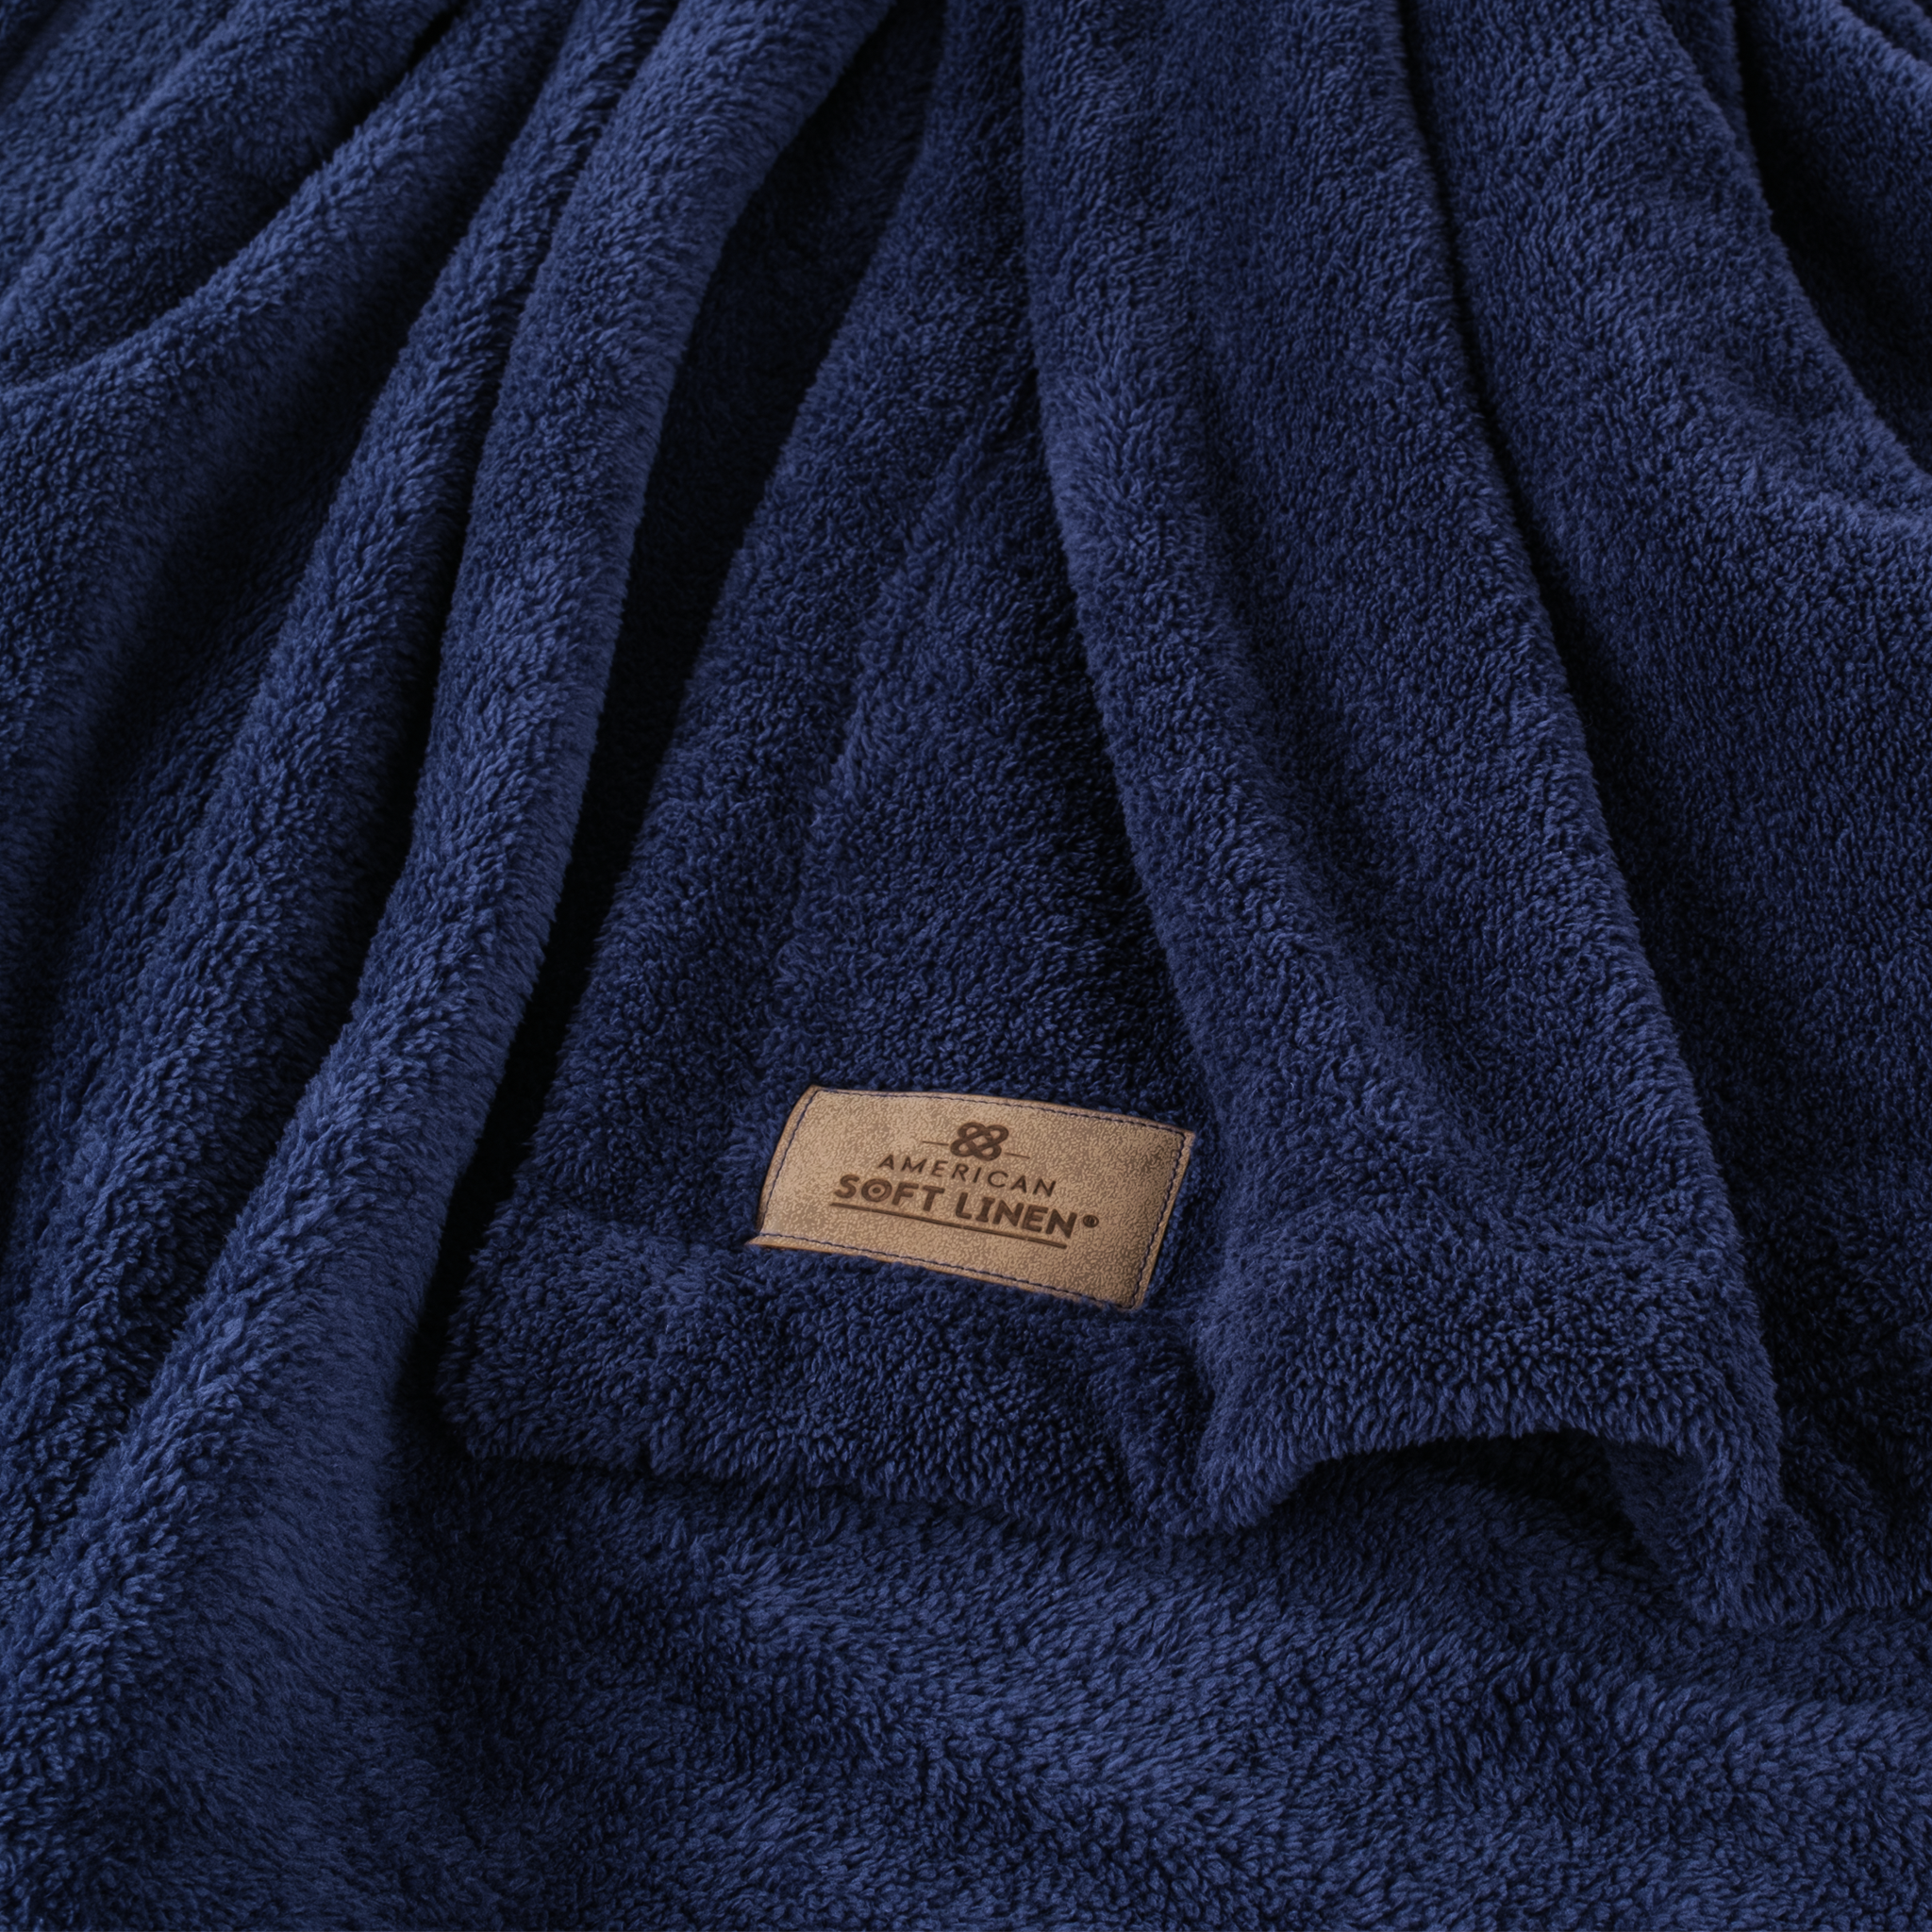 American Soft Linen - Bedding Fleece Blanket - Queen Size 85x90 inches - Navy-Blue - 4